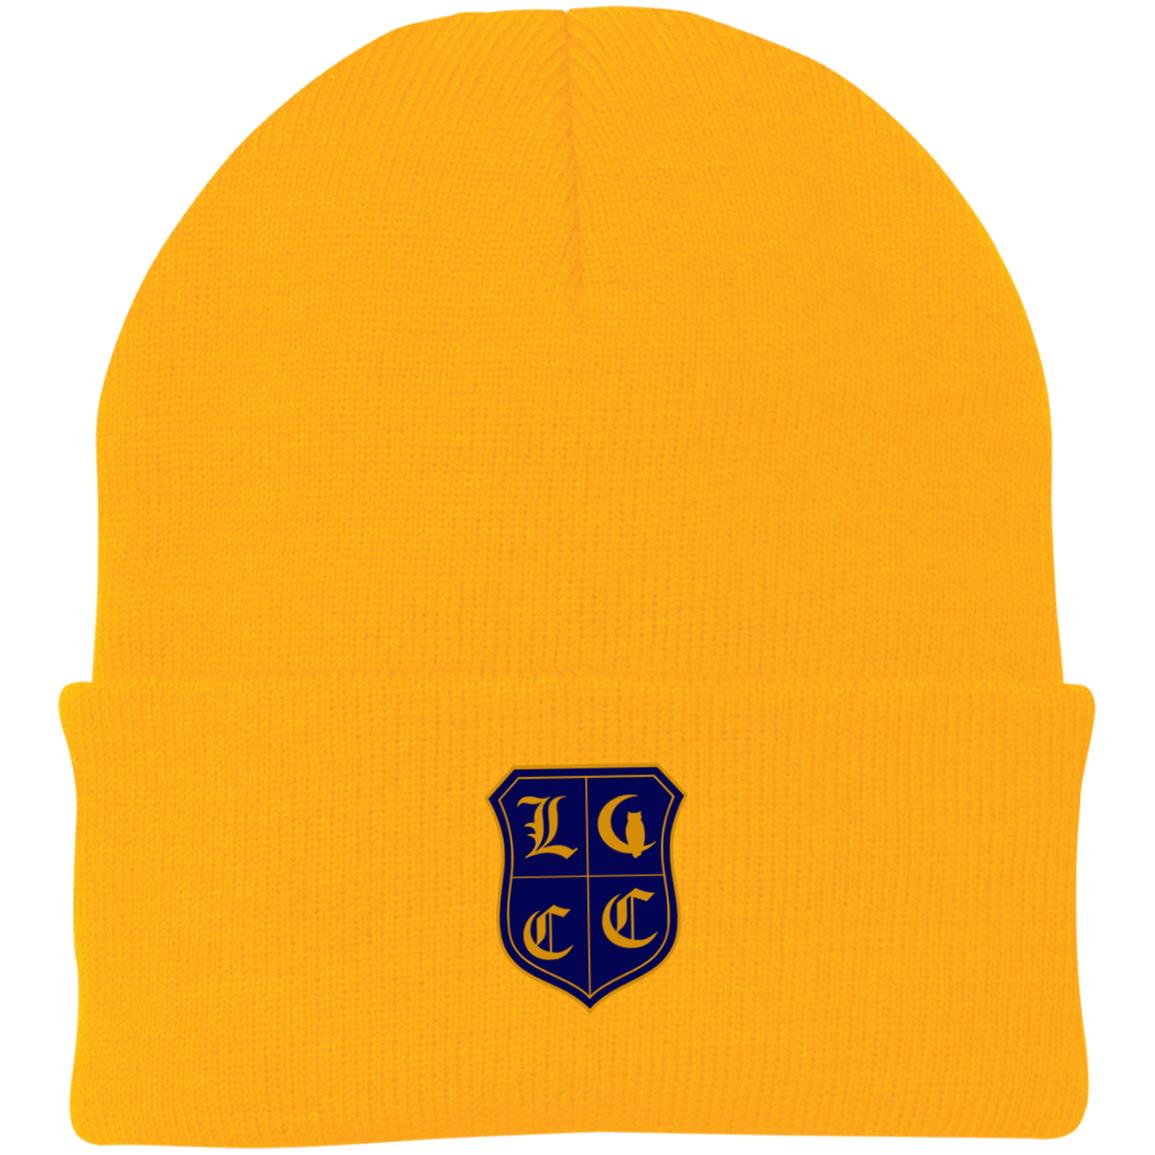 LCC Royal Knit Cap